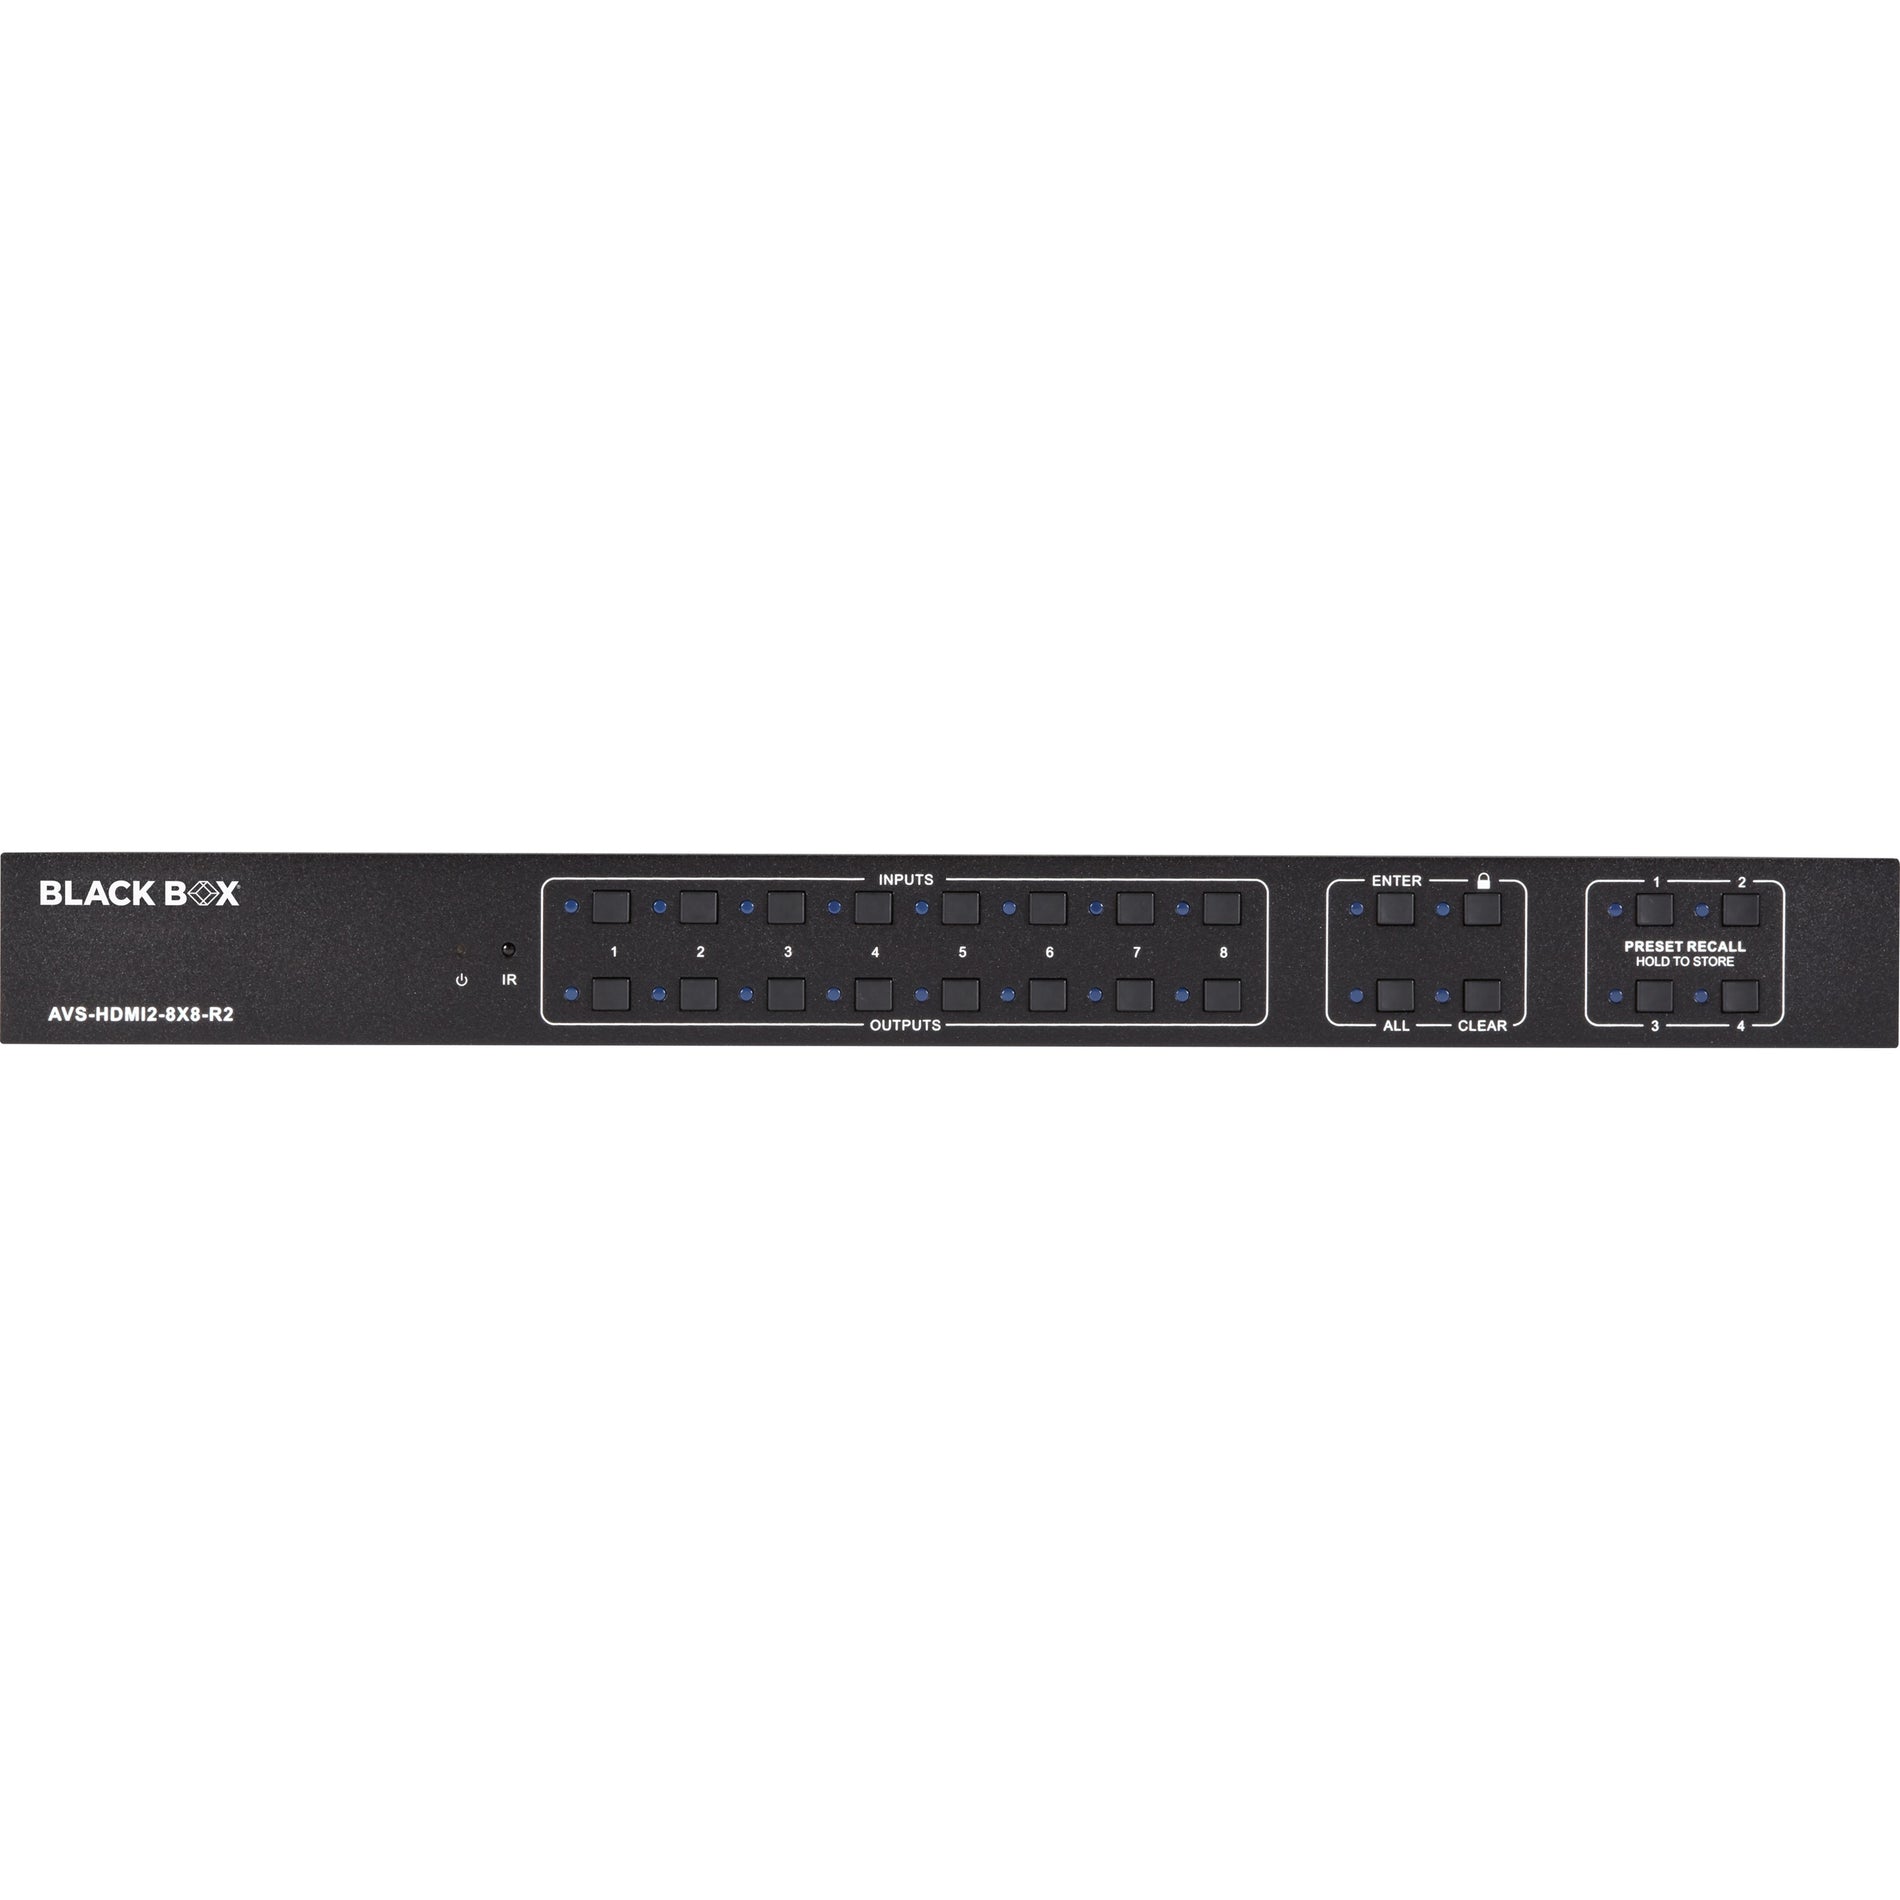 Black Box AVS-HDMI2-8X8-R2 Video Matrix Switcher - HDMI 2.0, 4K Graphics Modes, 3 Year Limited Warranty